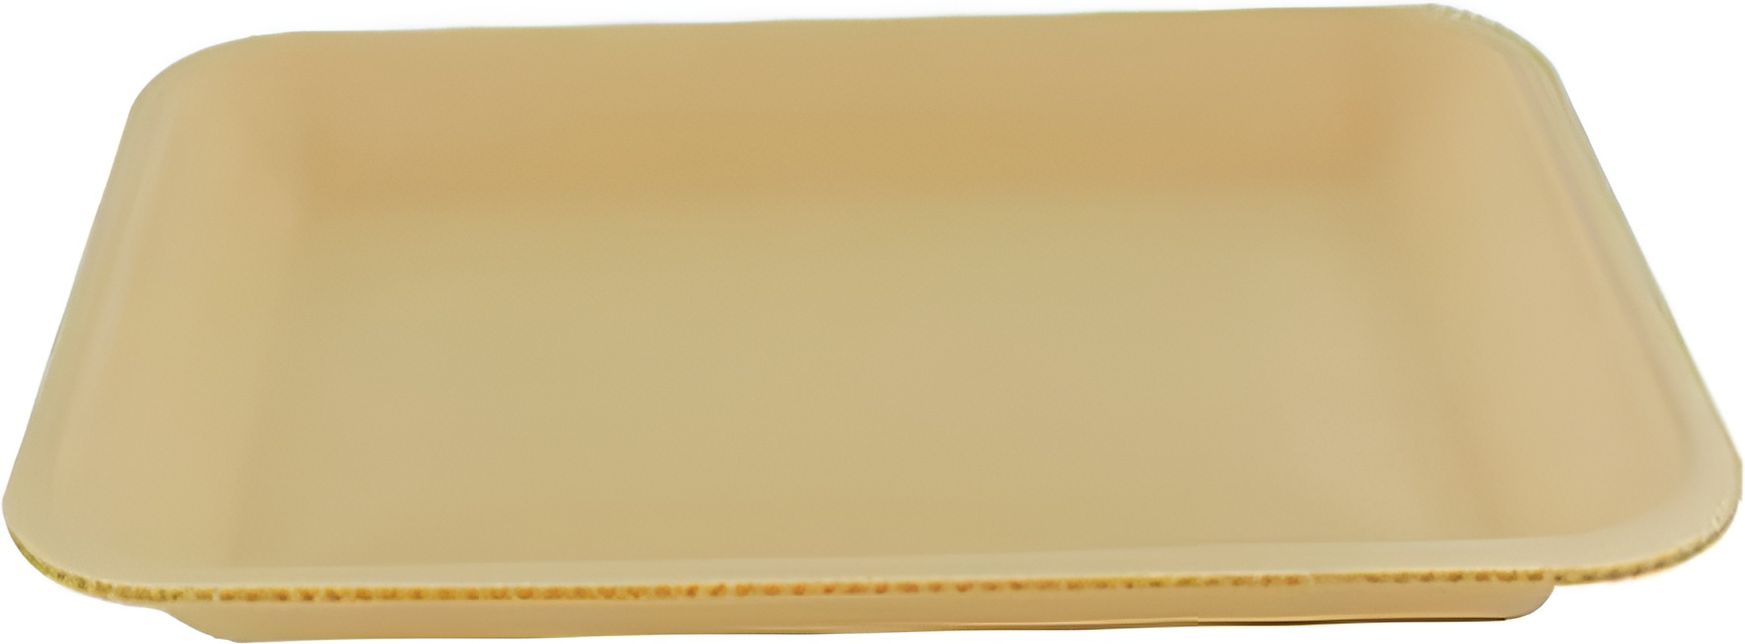 Dyne-A-Pak Inc. - 8.25" x 5.75" x 1" 2/2D Yellow Foam Meat Trays, 500 Per Case - 2010020Y00